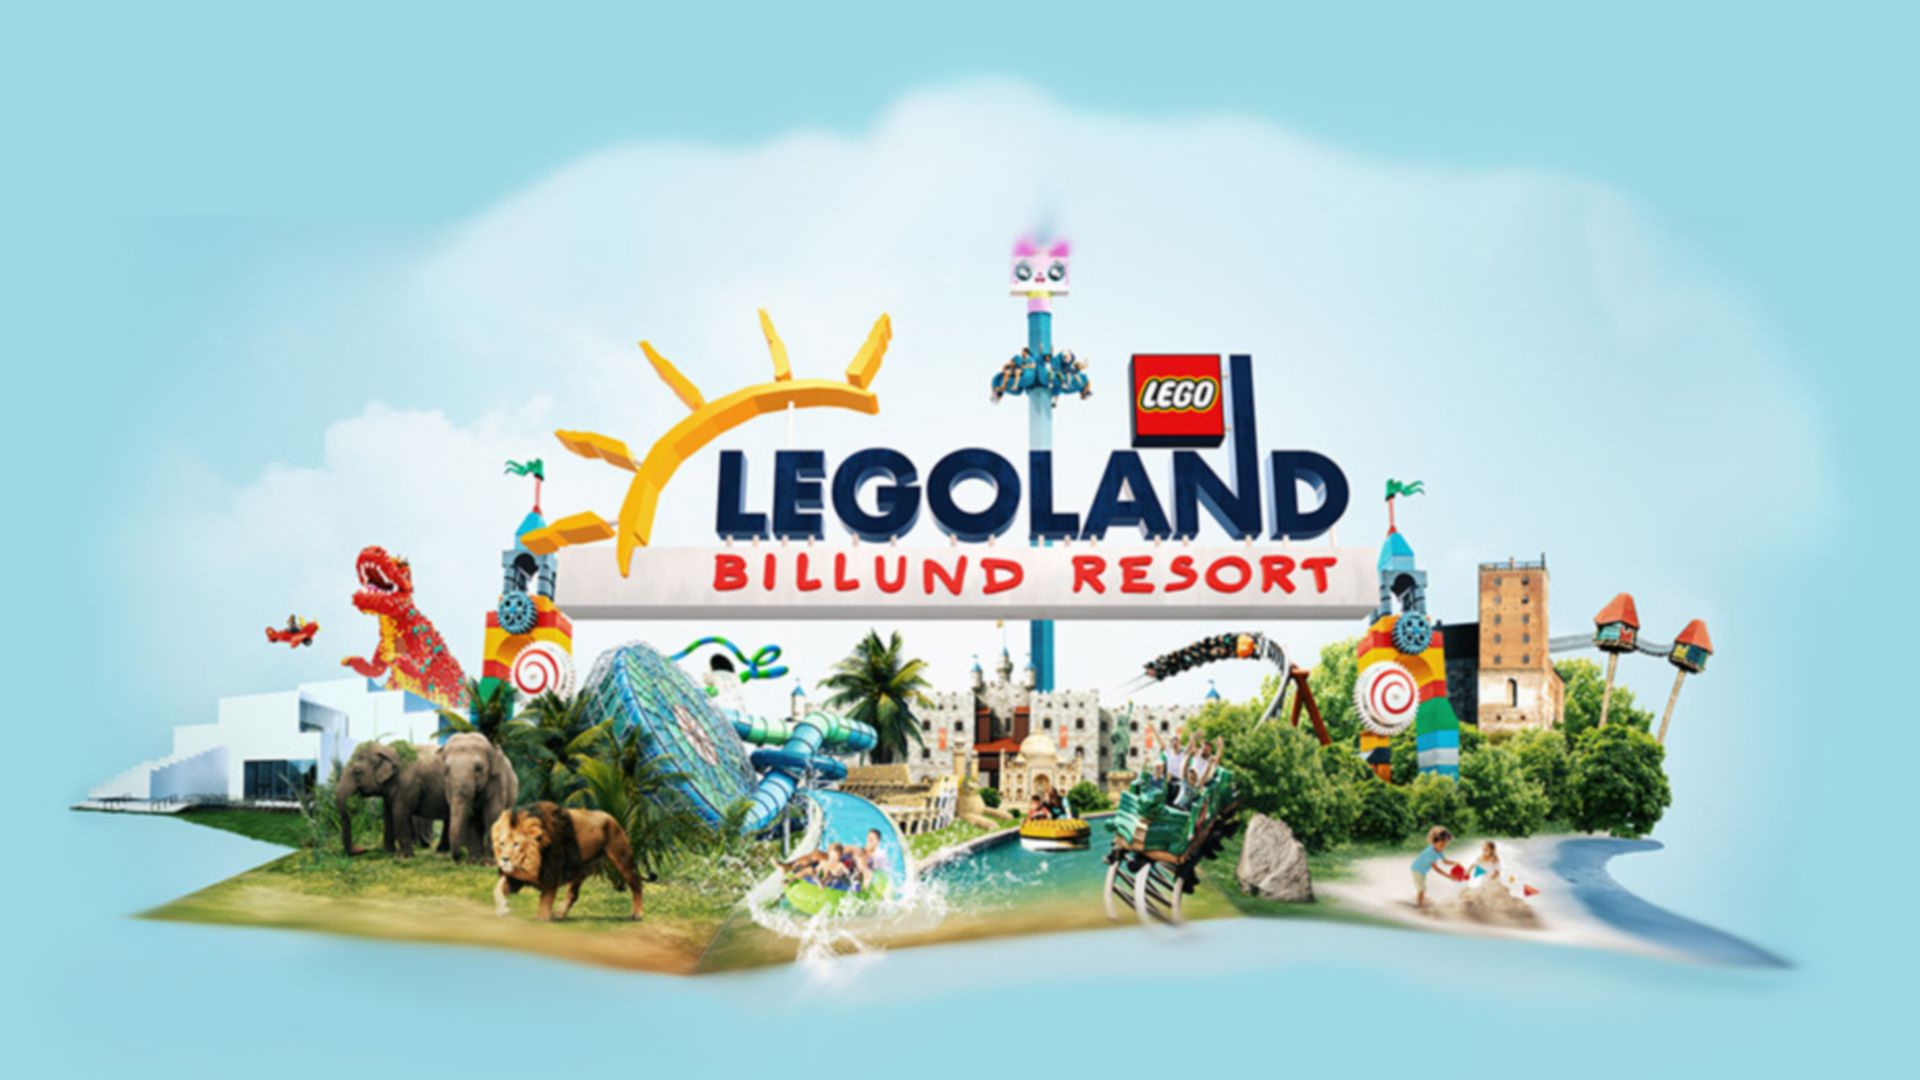 Bannière de héros Legoland Billund Resort